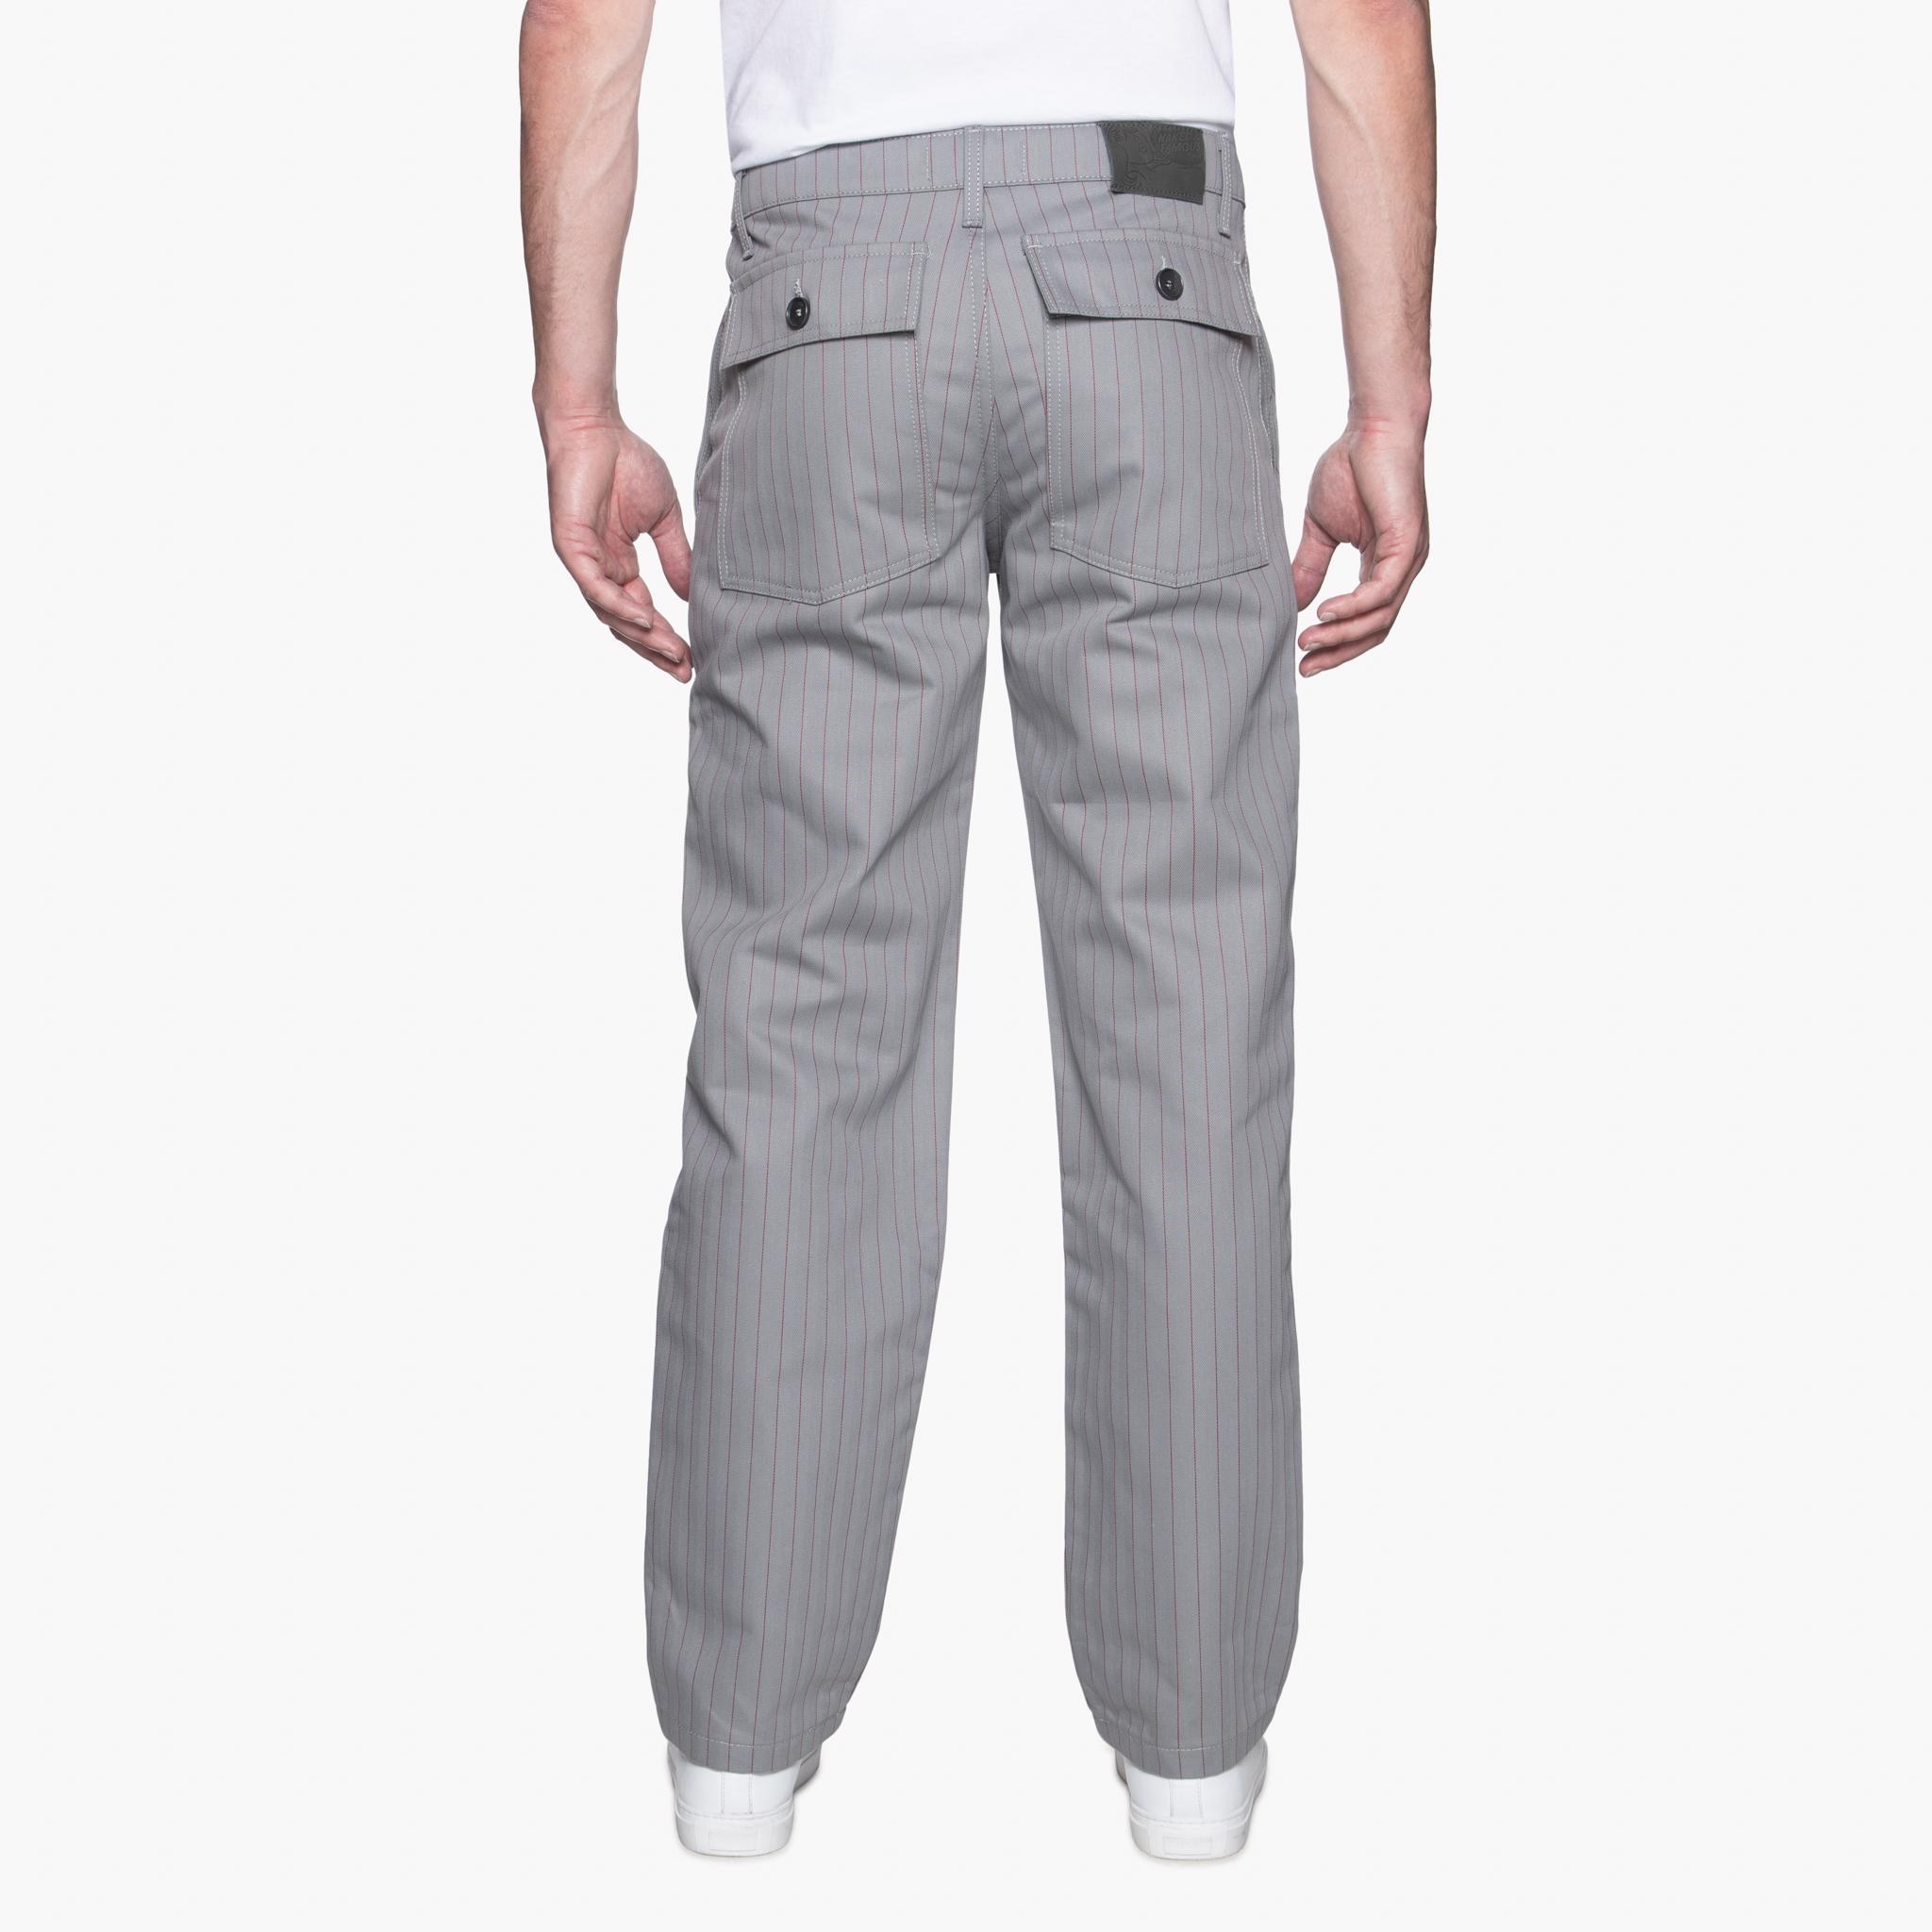  Work Pant - Repro Workwear Twill Grey - back 